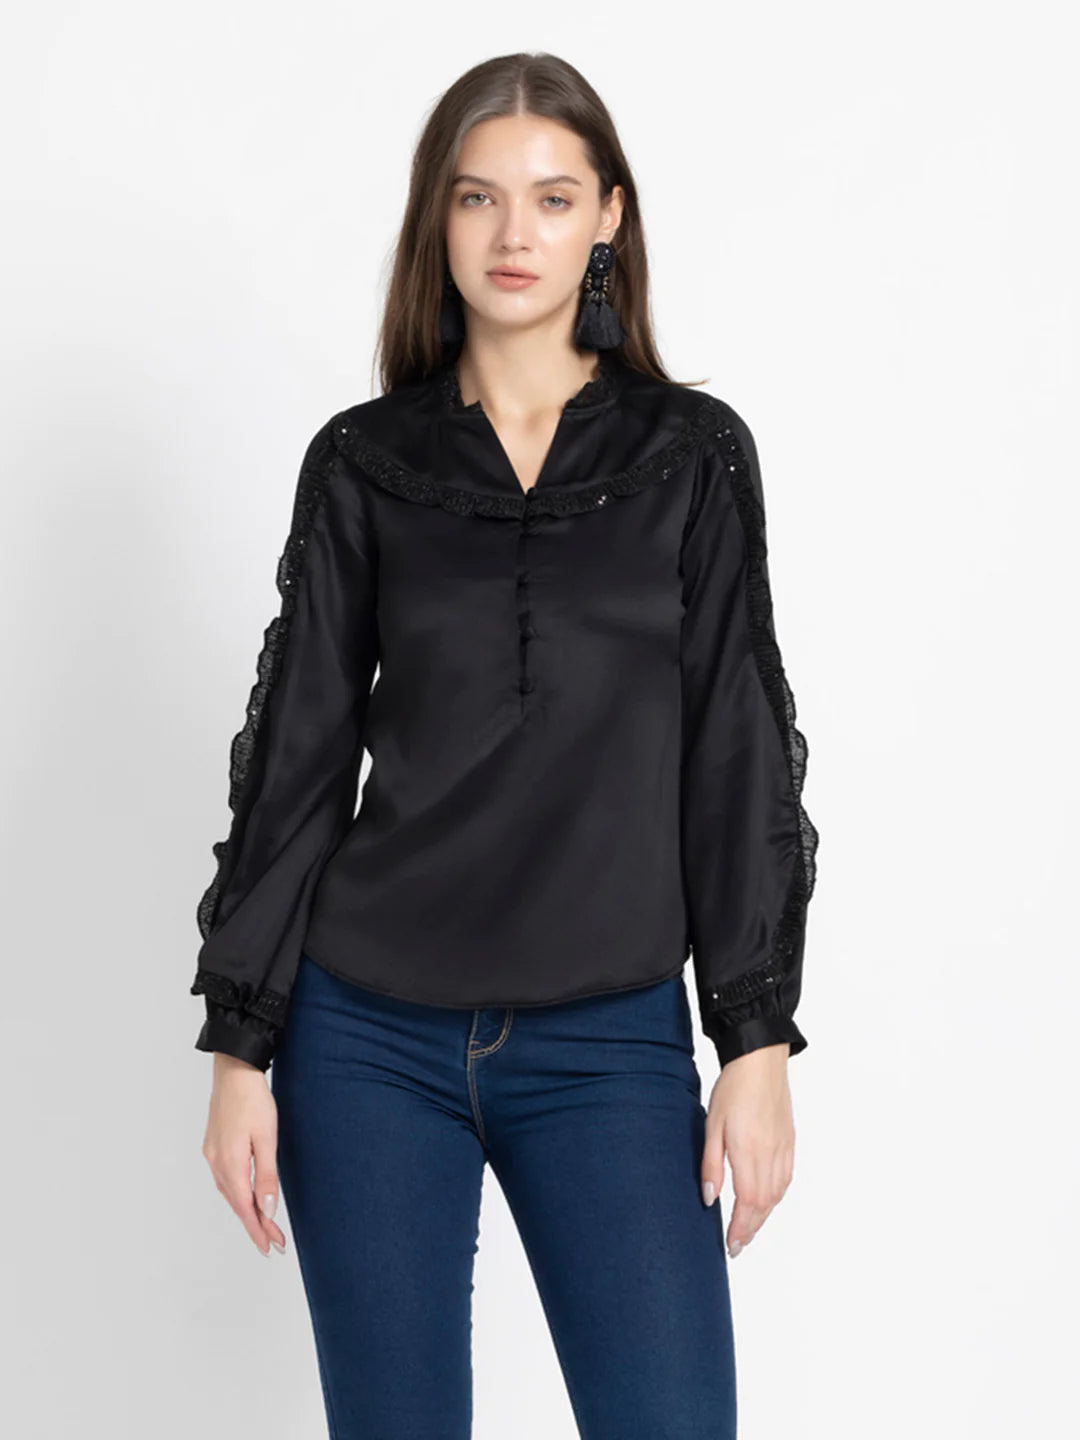 Black Party Shirt for Women | Elegant Noir Black Frill Sleeves Party Shirt